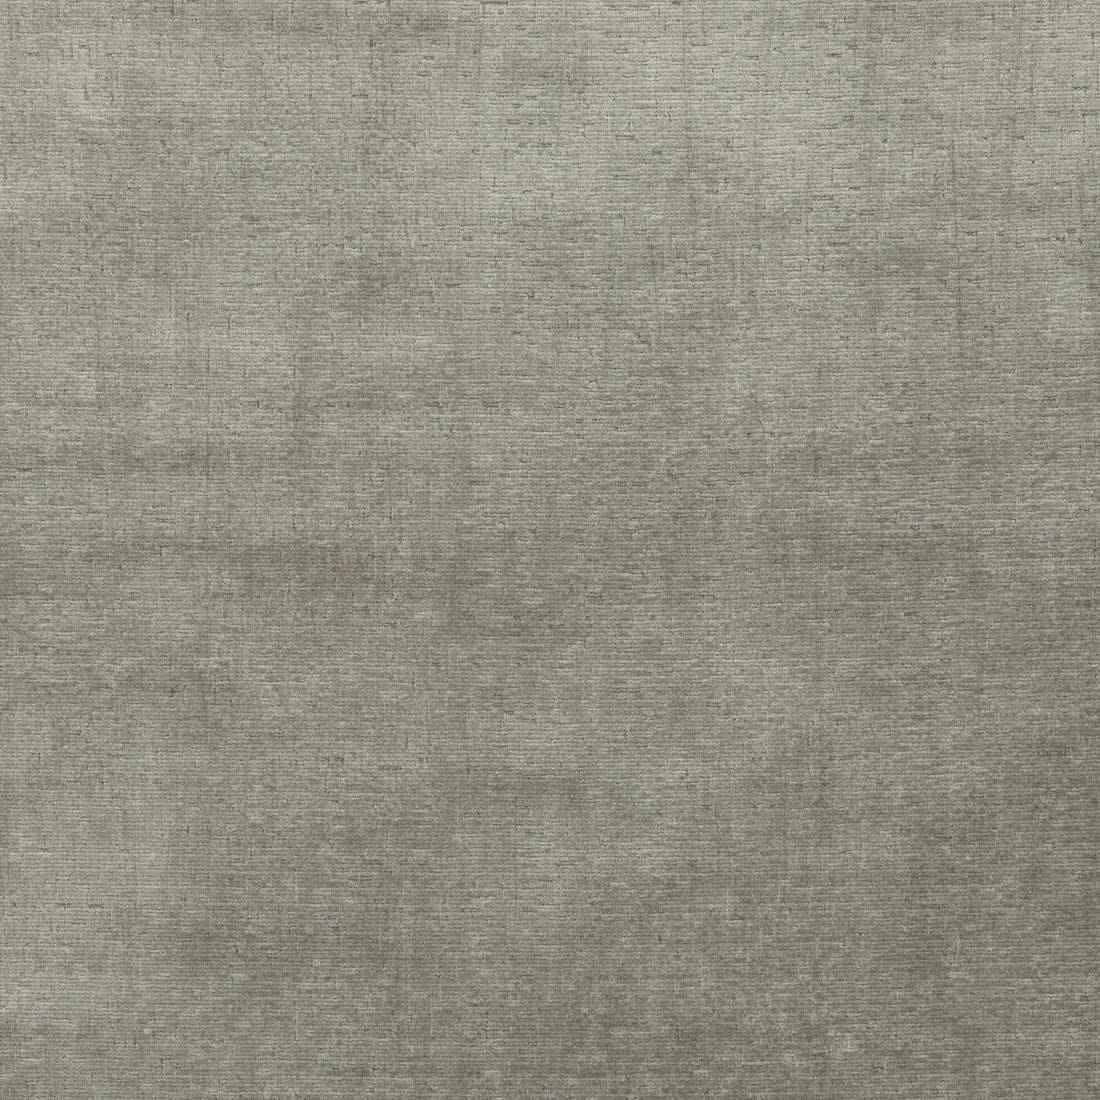 Alma Velvet fabric in pewter color - pattern BF10827.945.0 - by G P &amp; J Baker in the Coromandel Velvets collection